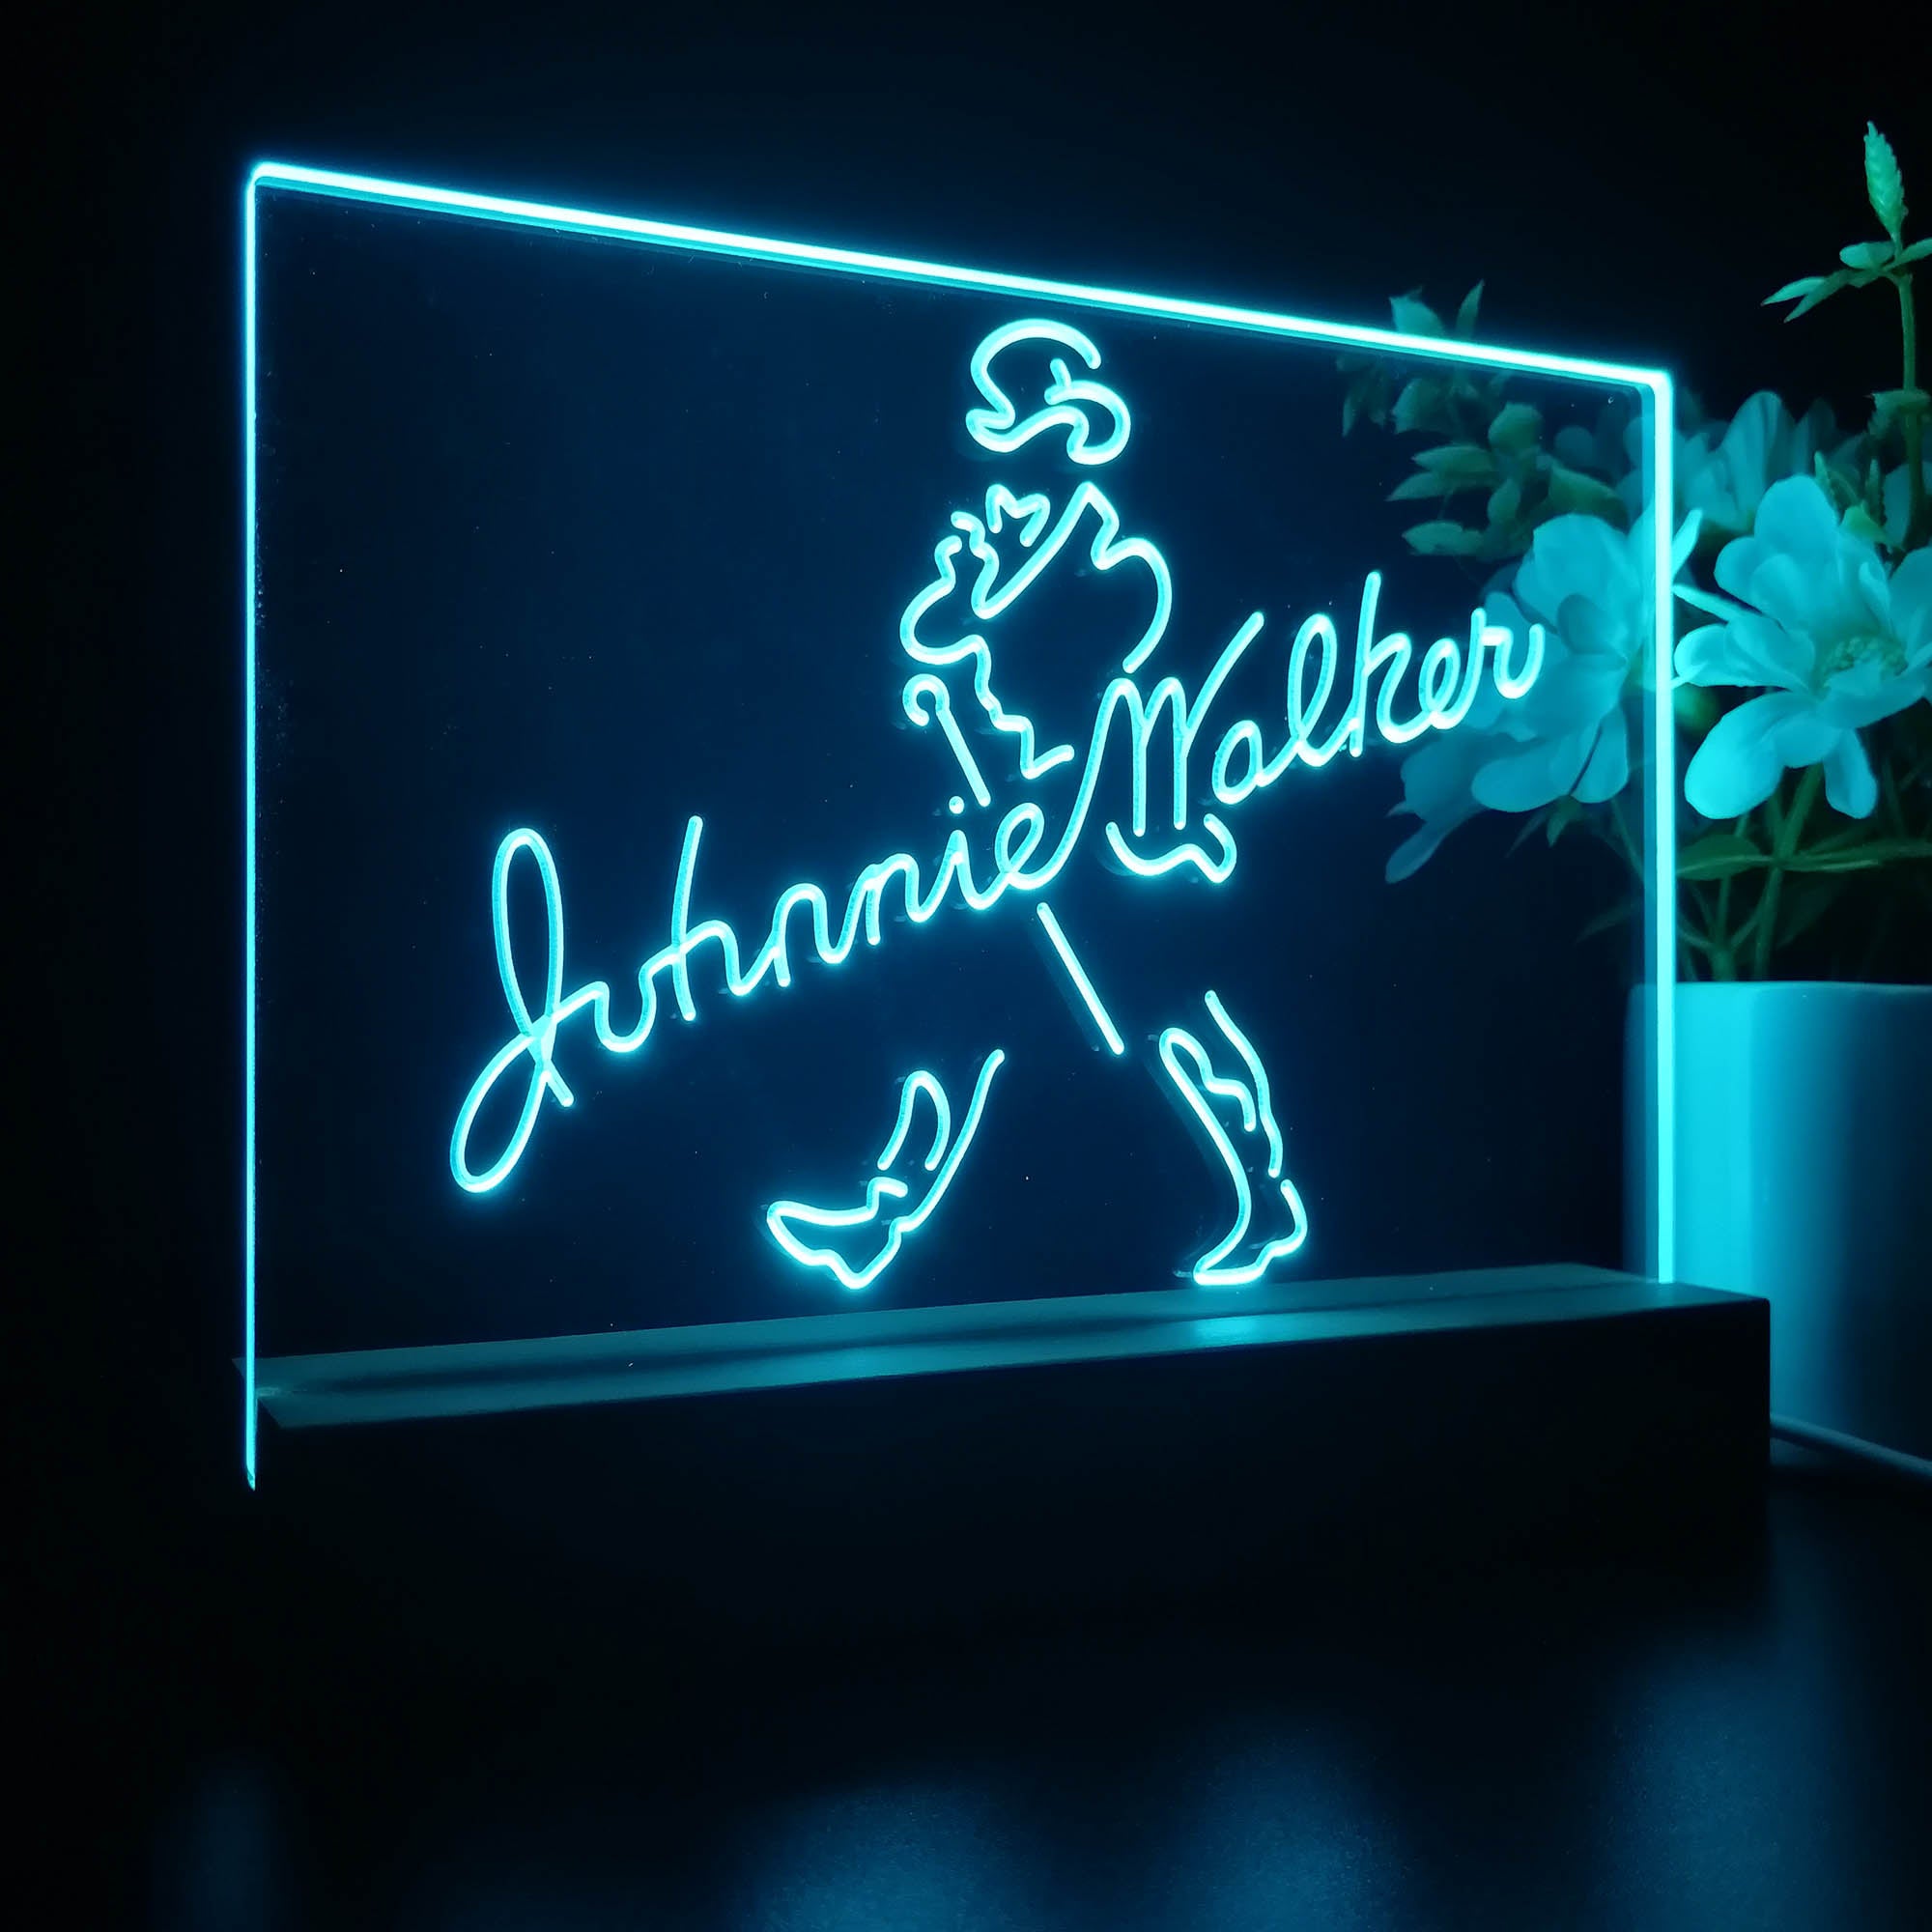 Johnnie Walker Night Light LED Sign